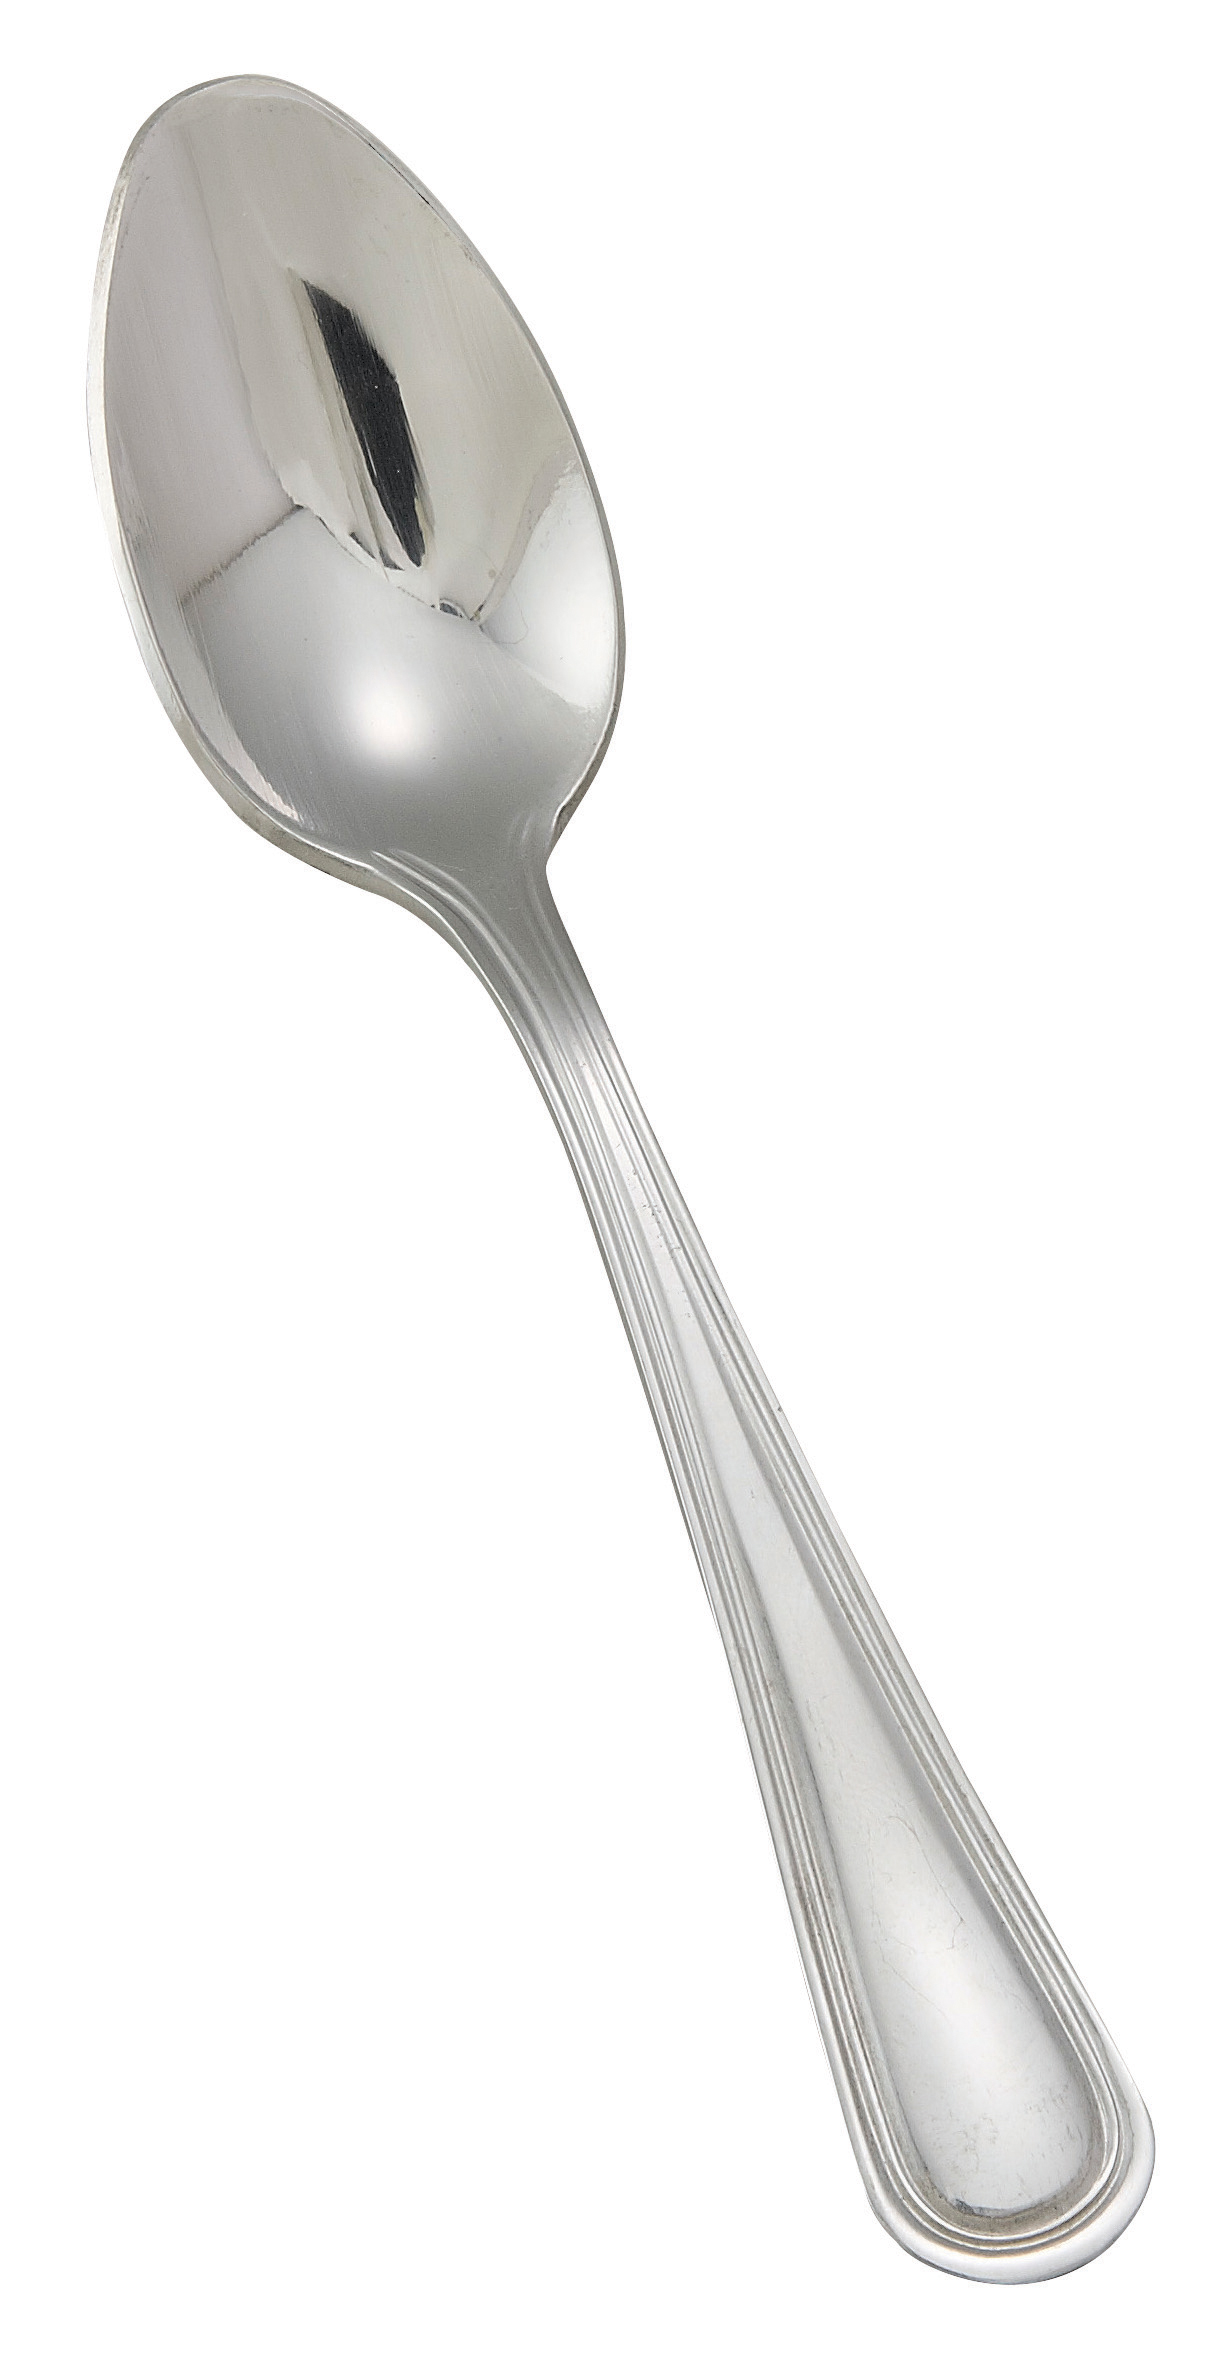 Teaspoon, 18/0 stainless steel, extra heavy, 